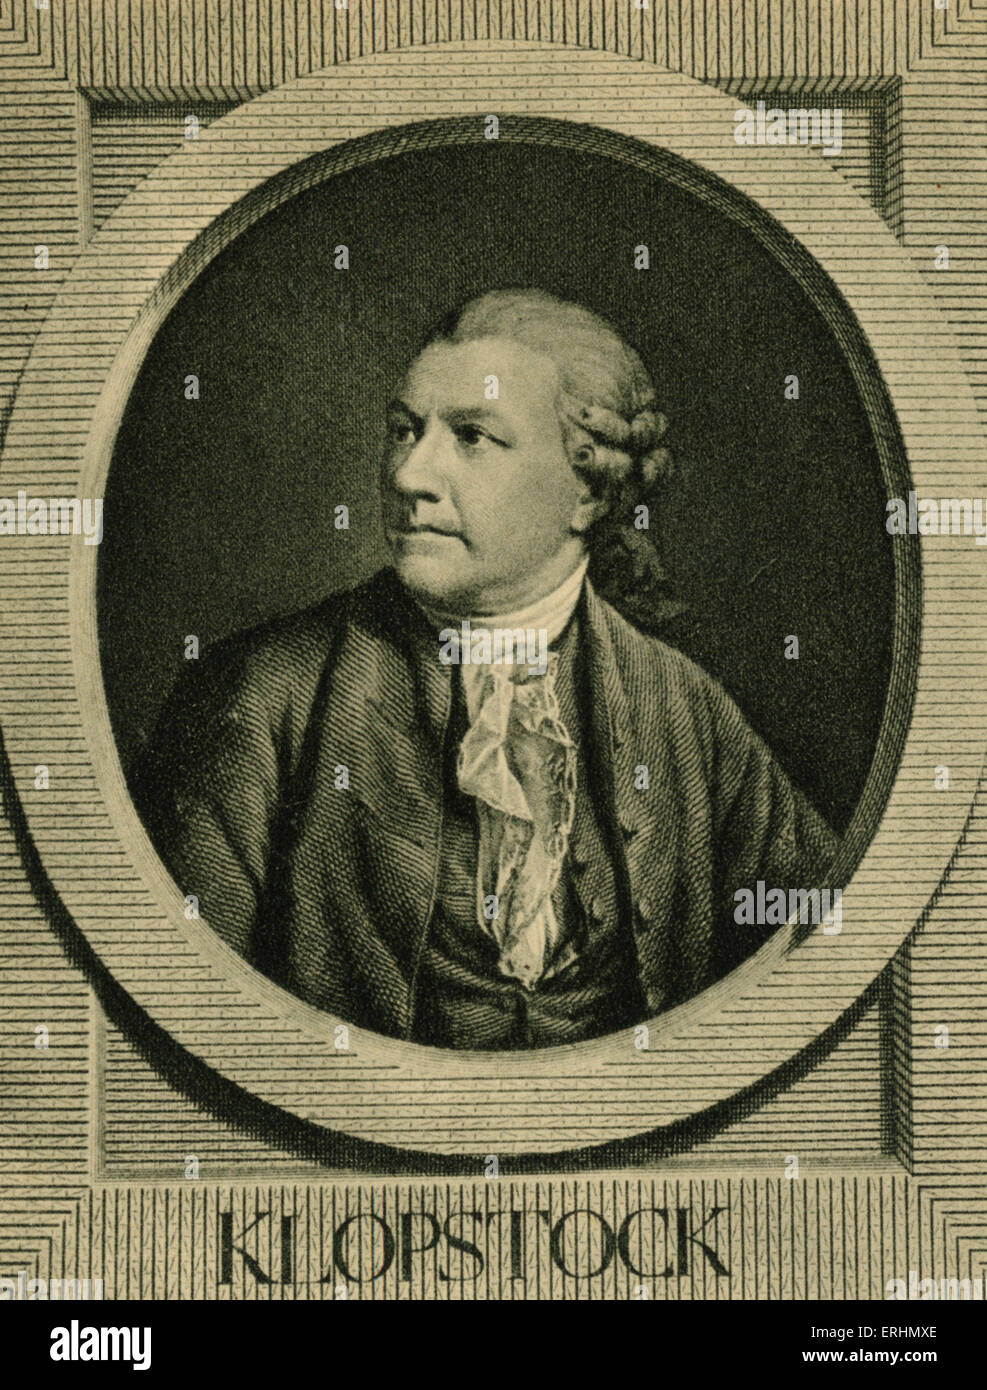 KLOPSTOCK, Friedrich Gottlieb. German poet writer, 1724-1803 postcard Stock Photo